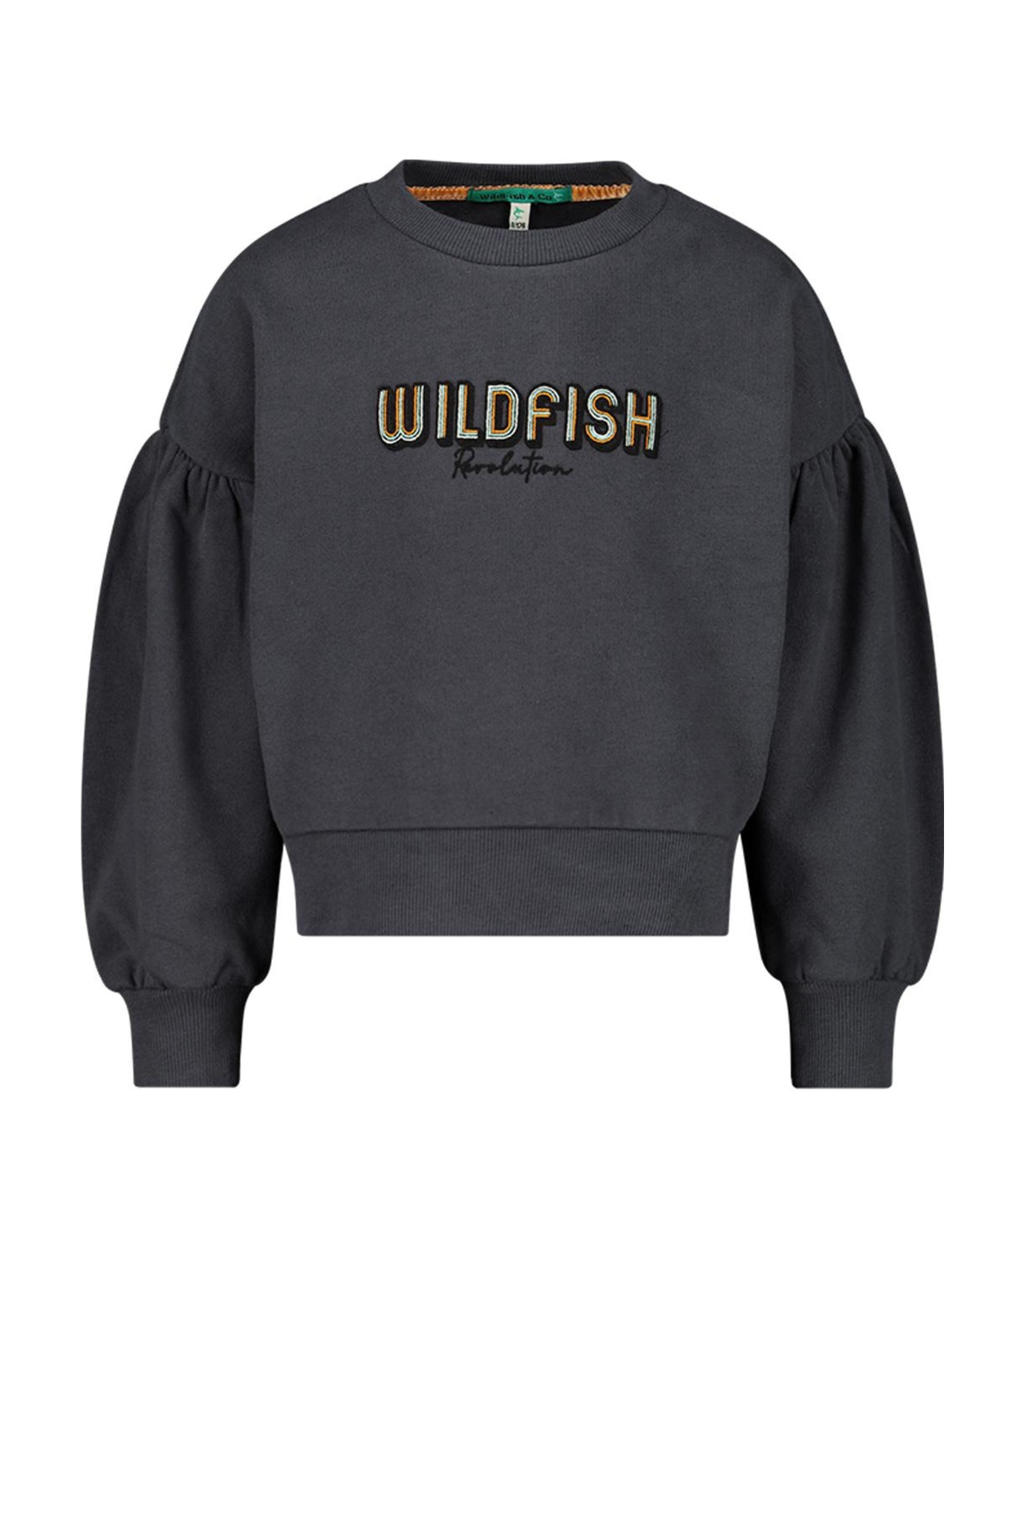 Grijze meisjes Wildfish sweater Kit met tekst print, lange mouwen, ronde hals en pofmouwen